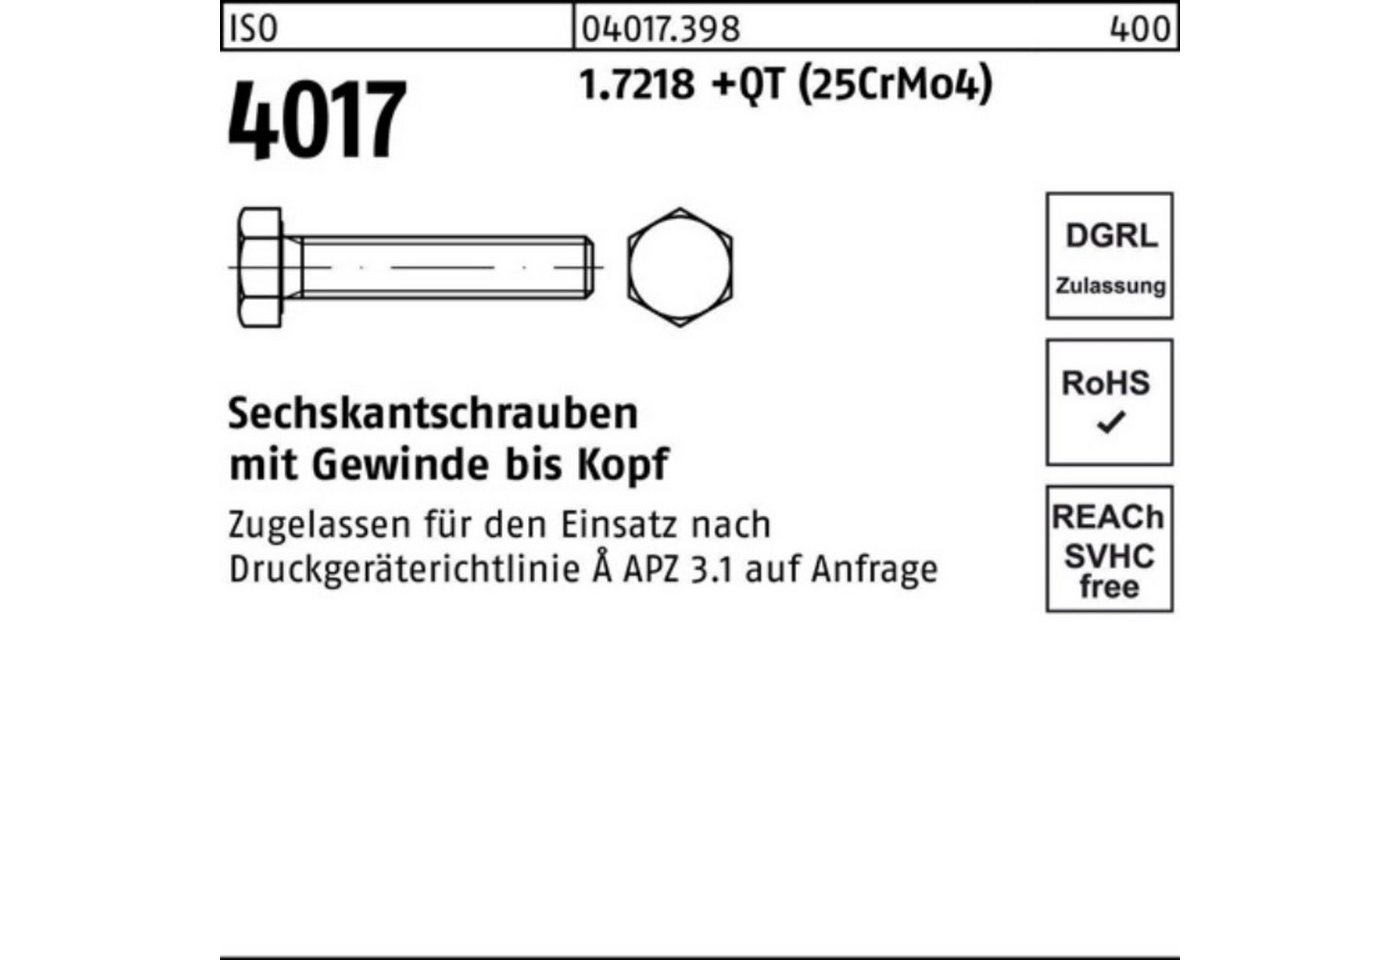 Bufab Sechskantschraube 100er Pack Sechskantschraube ISO 4017 VG M12x 30 1.7218 +QT (25CrMo4) von Bufab